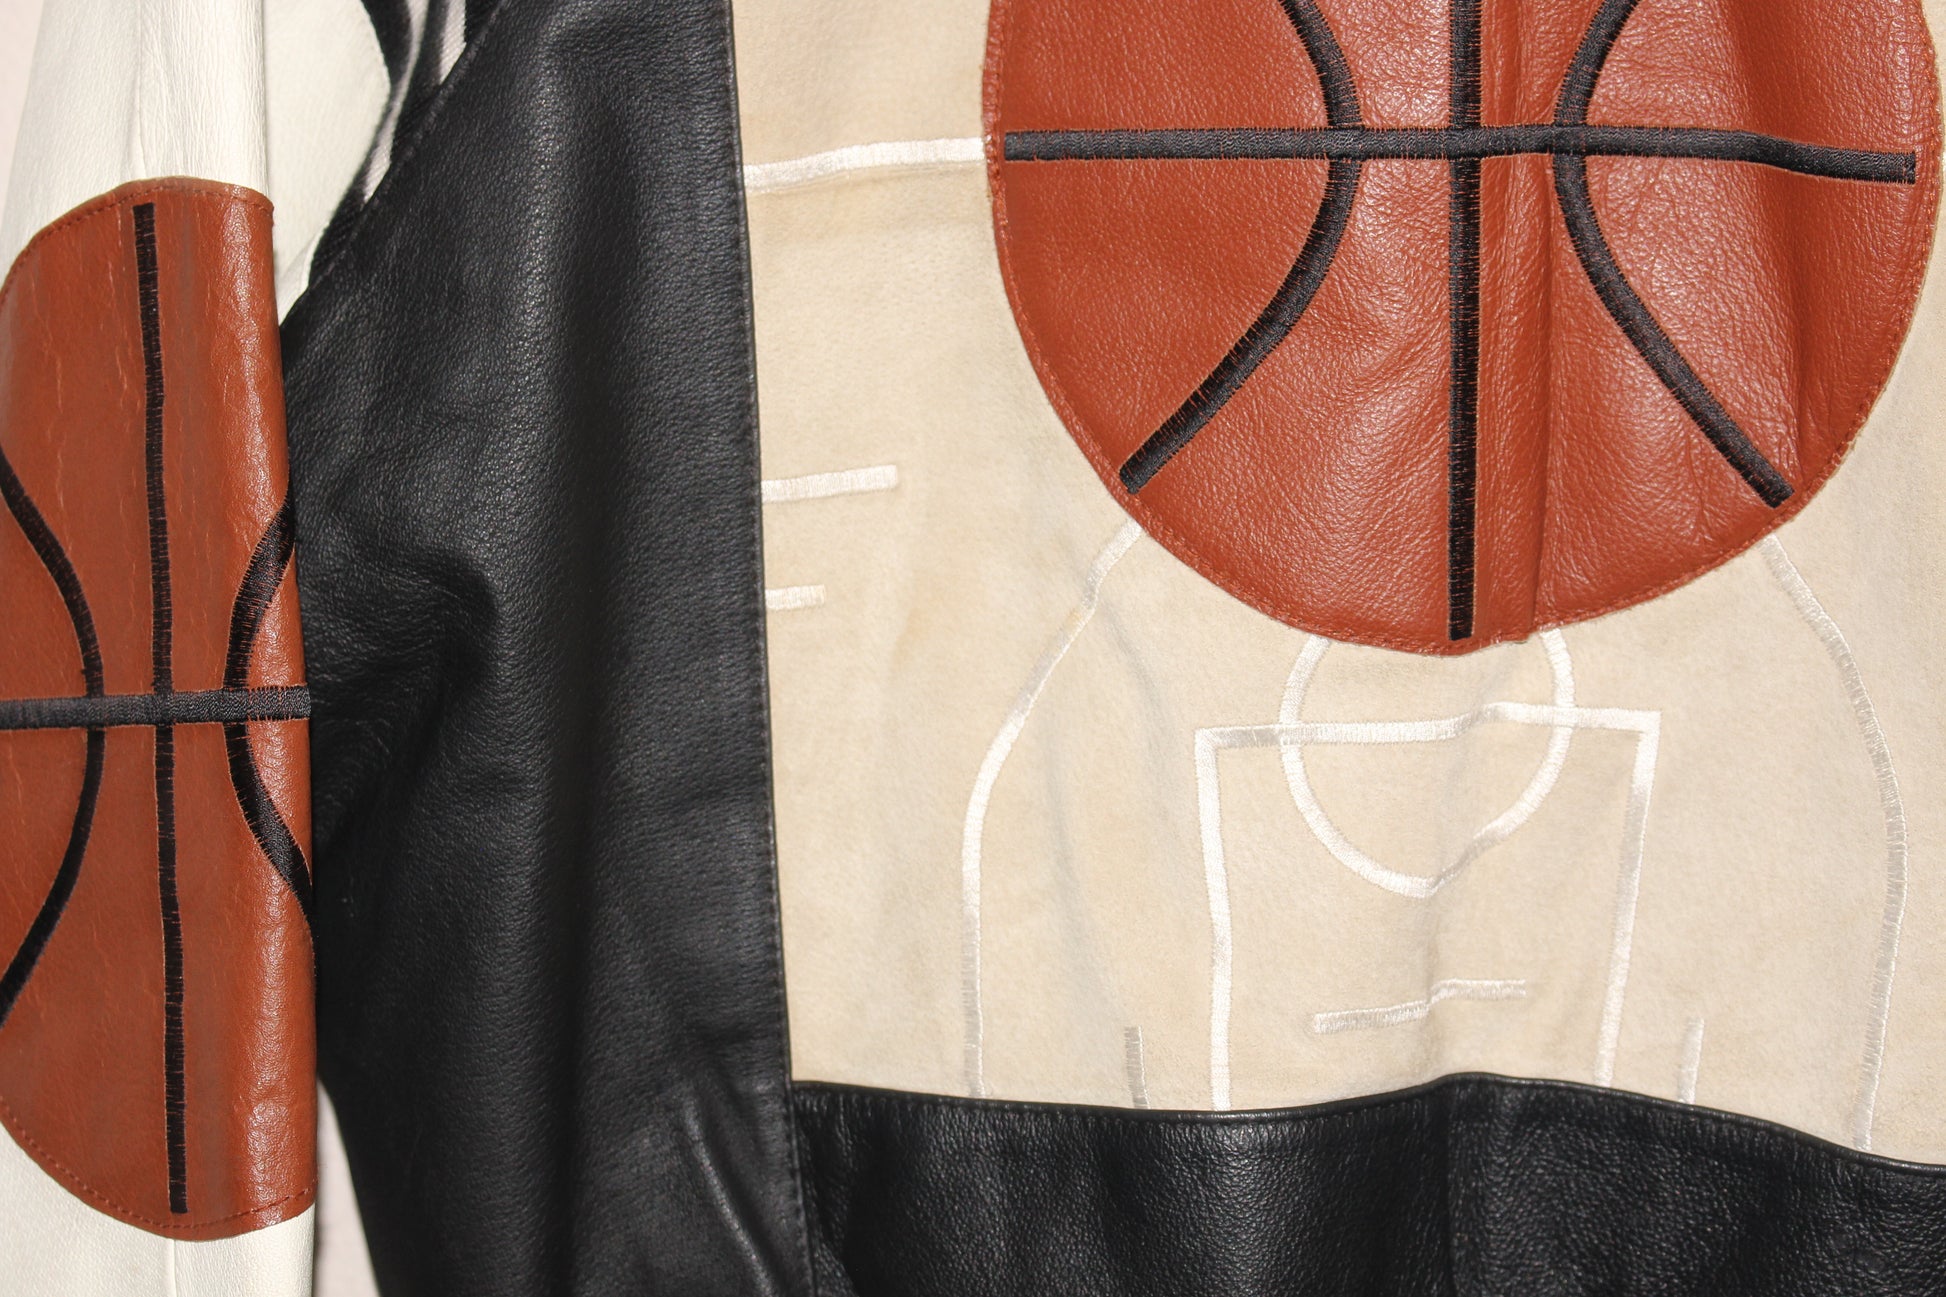 Josh Yaz 1991 Michael Hoban Leather Basketball Bomber Jacket